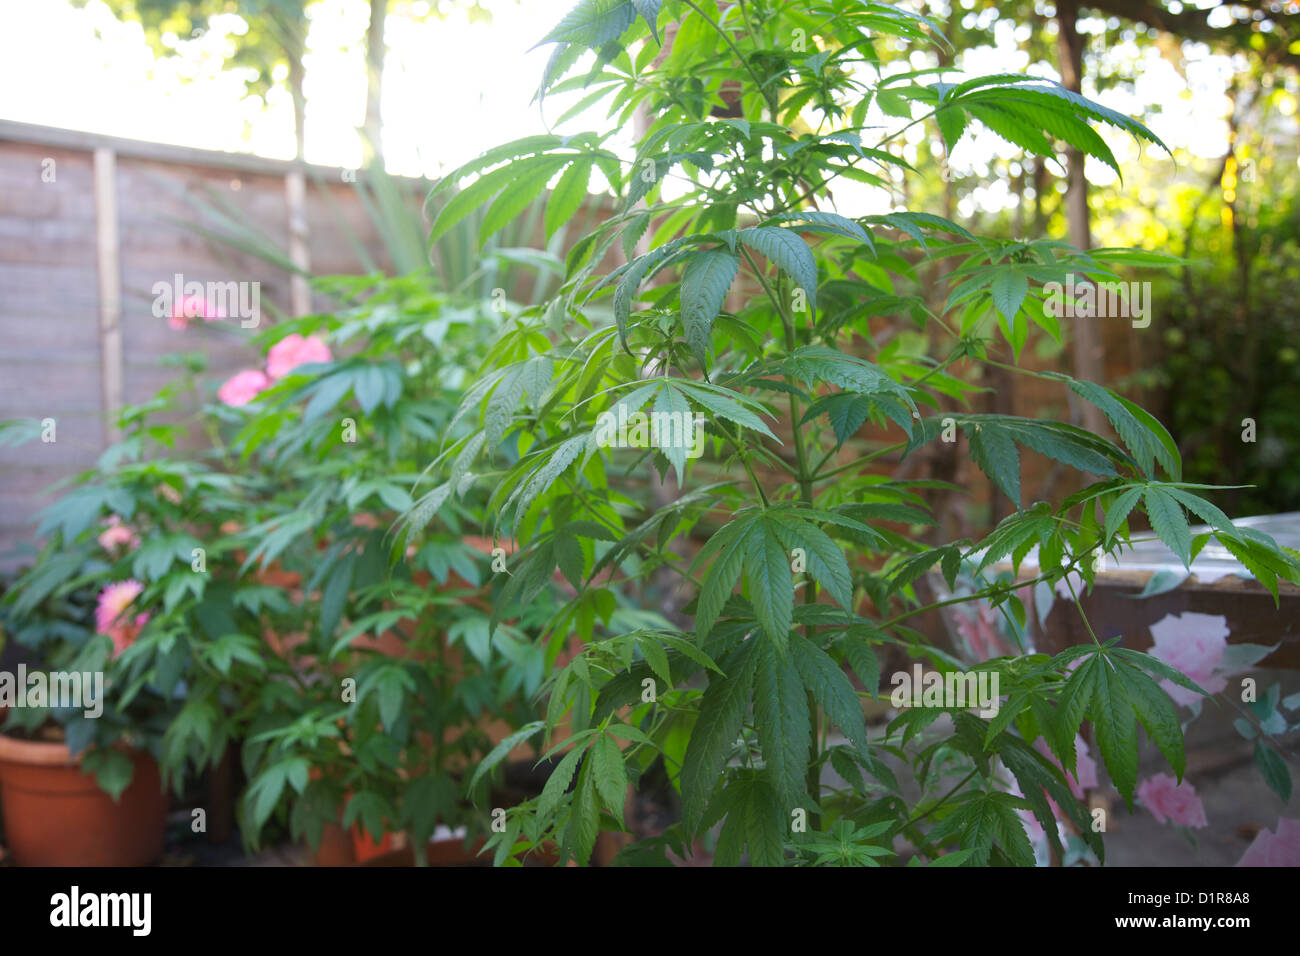 Piante di cannabis, marijuana, crescendo in vasi in back yard Foto Stock